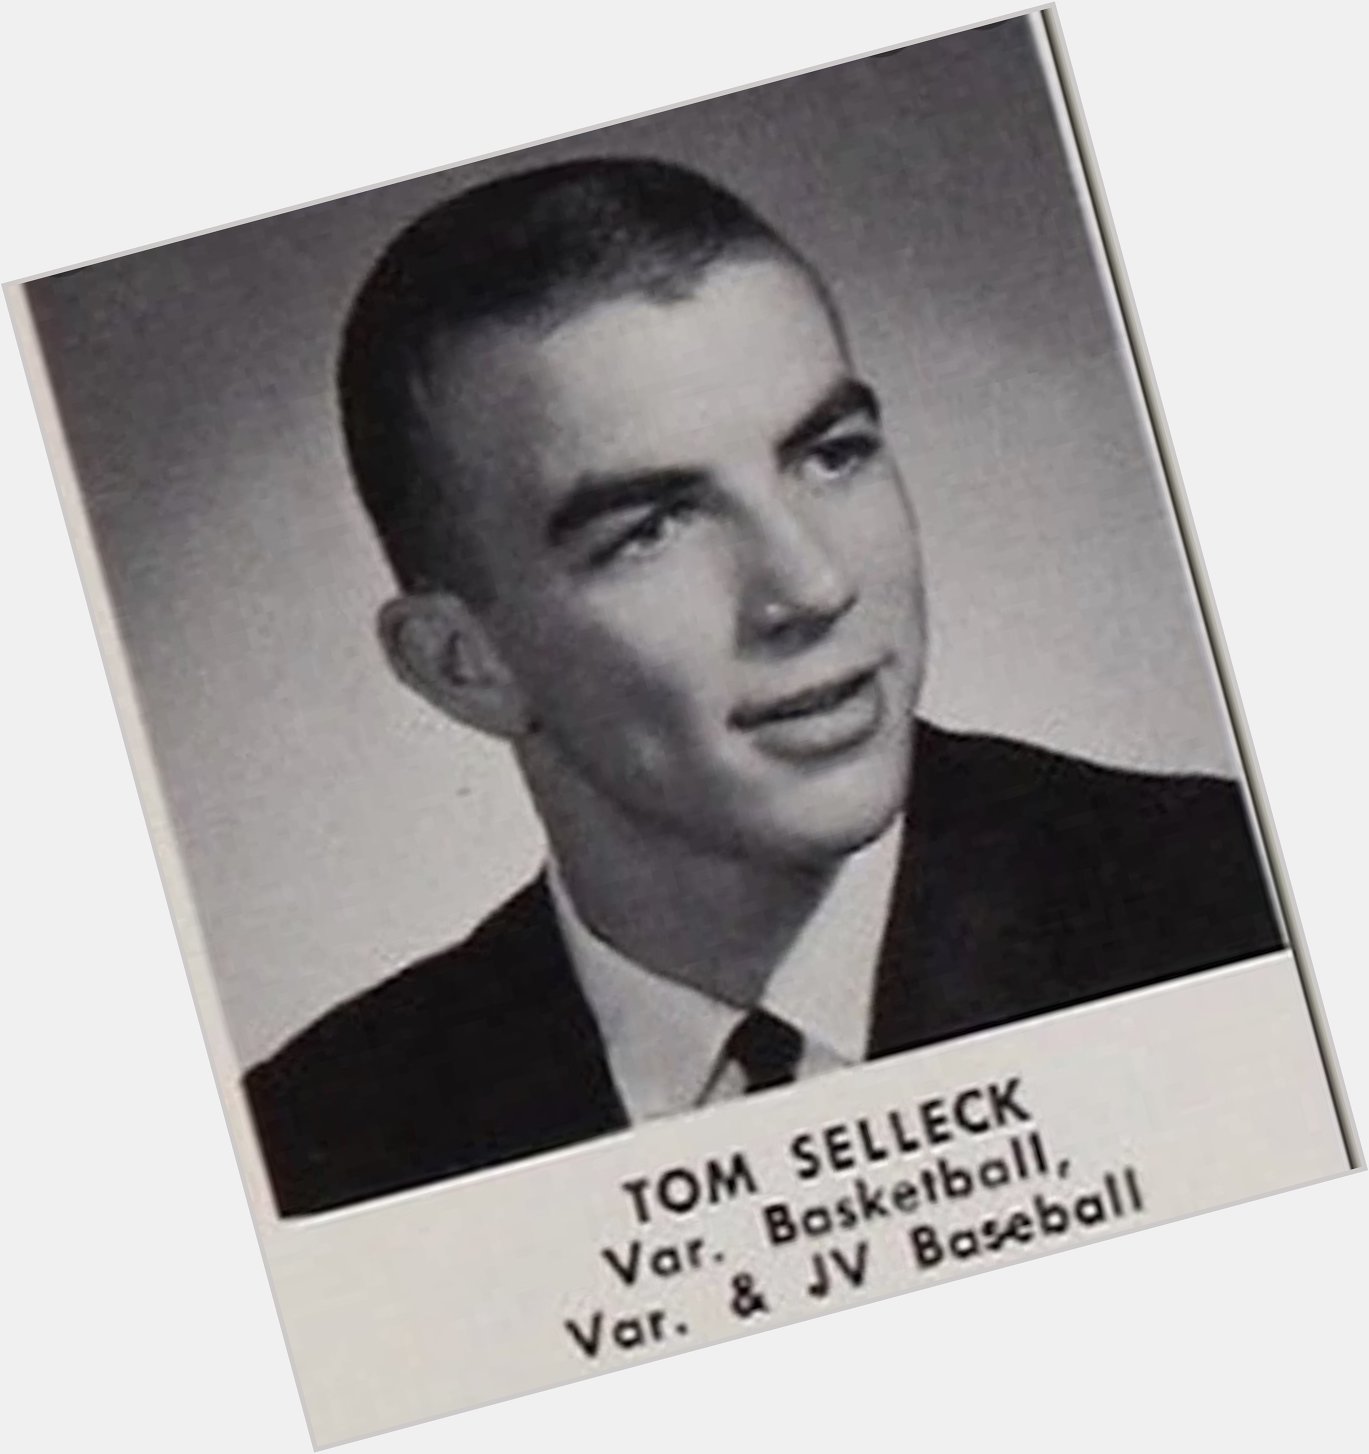 Happy 77th birthday to Tom Selleck 